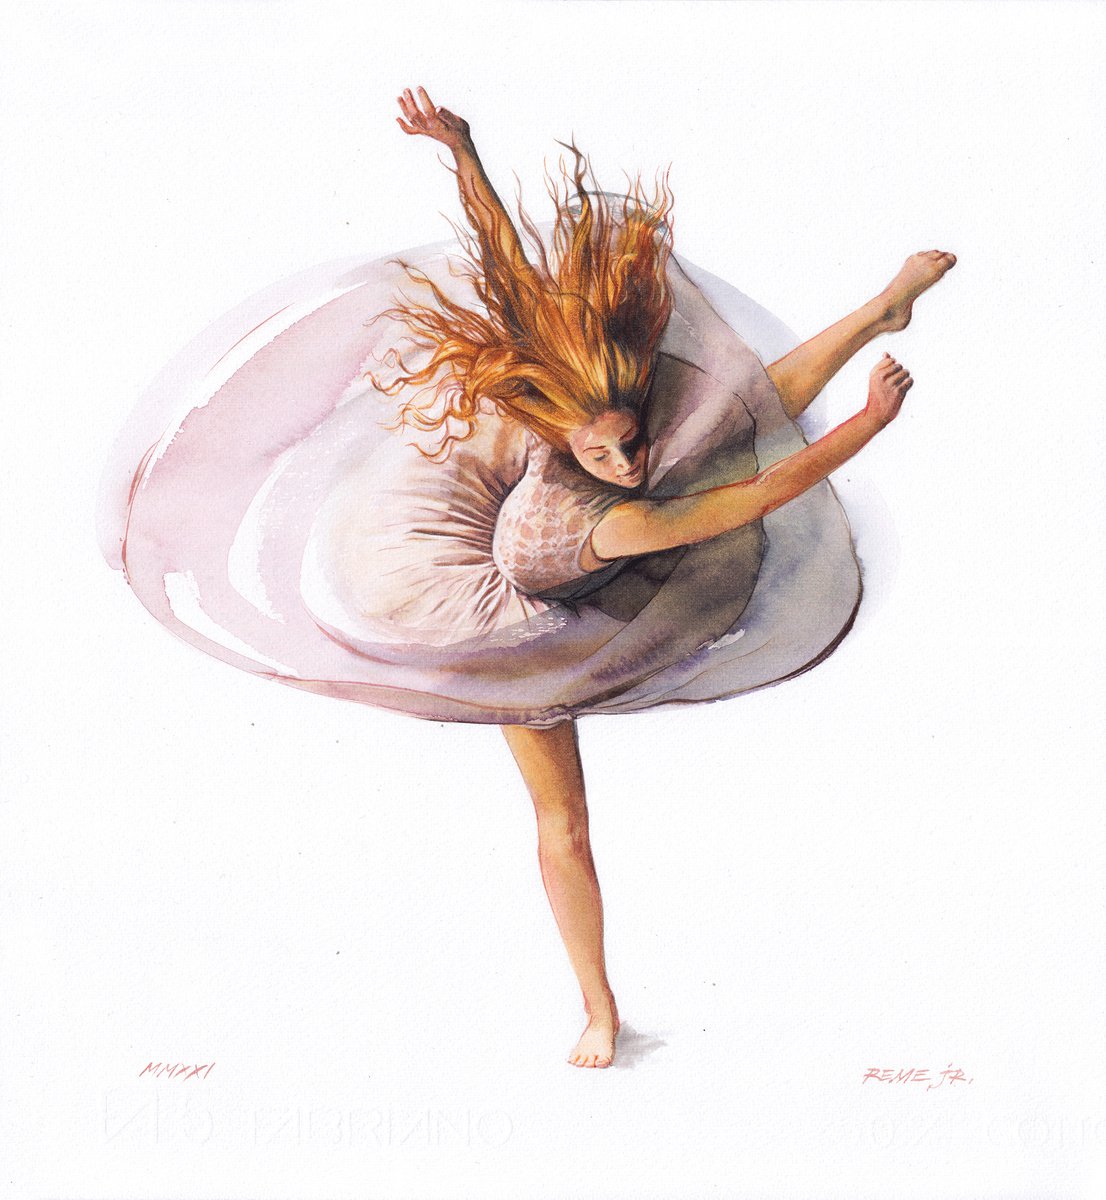 Ballet Dancer CXXII by REME Jr.